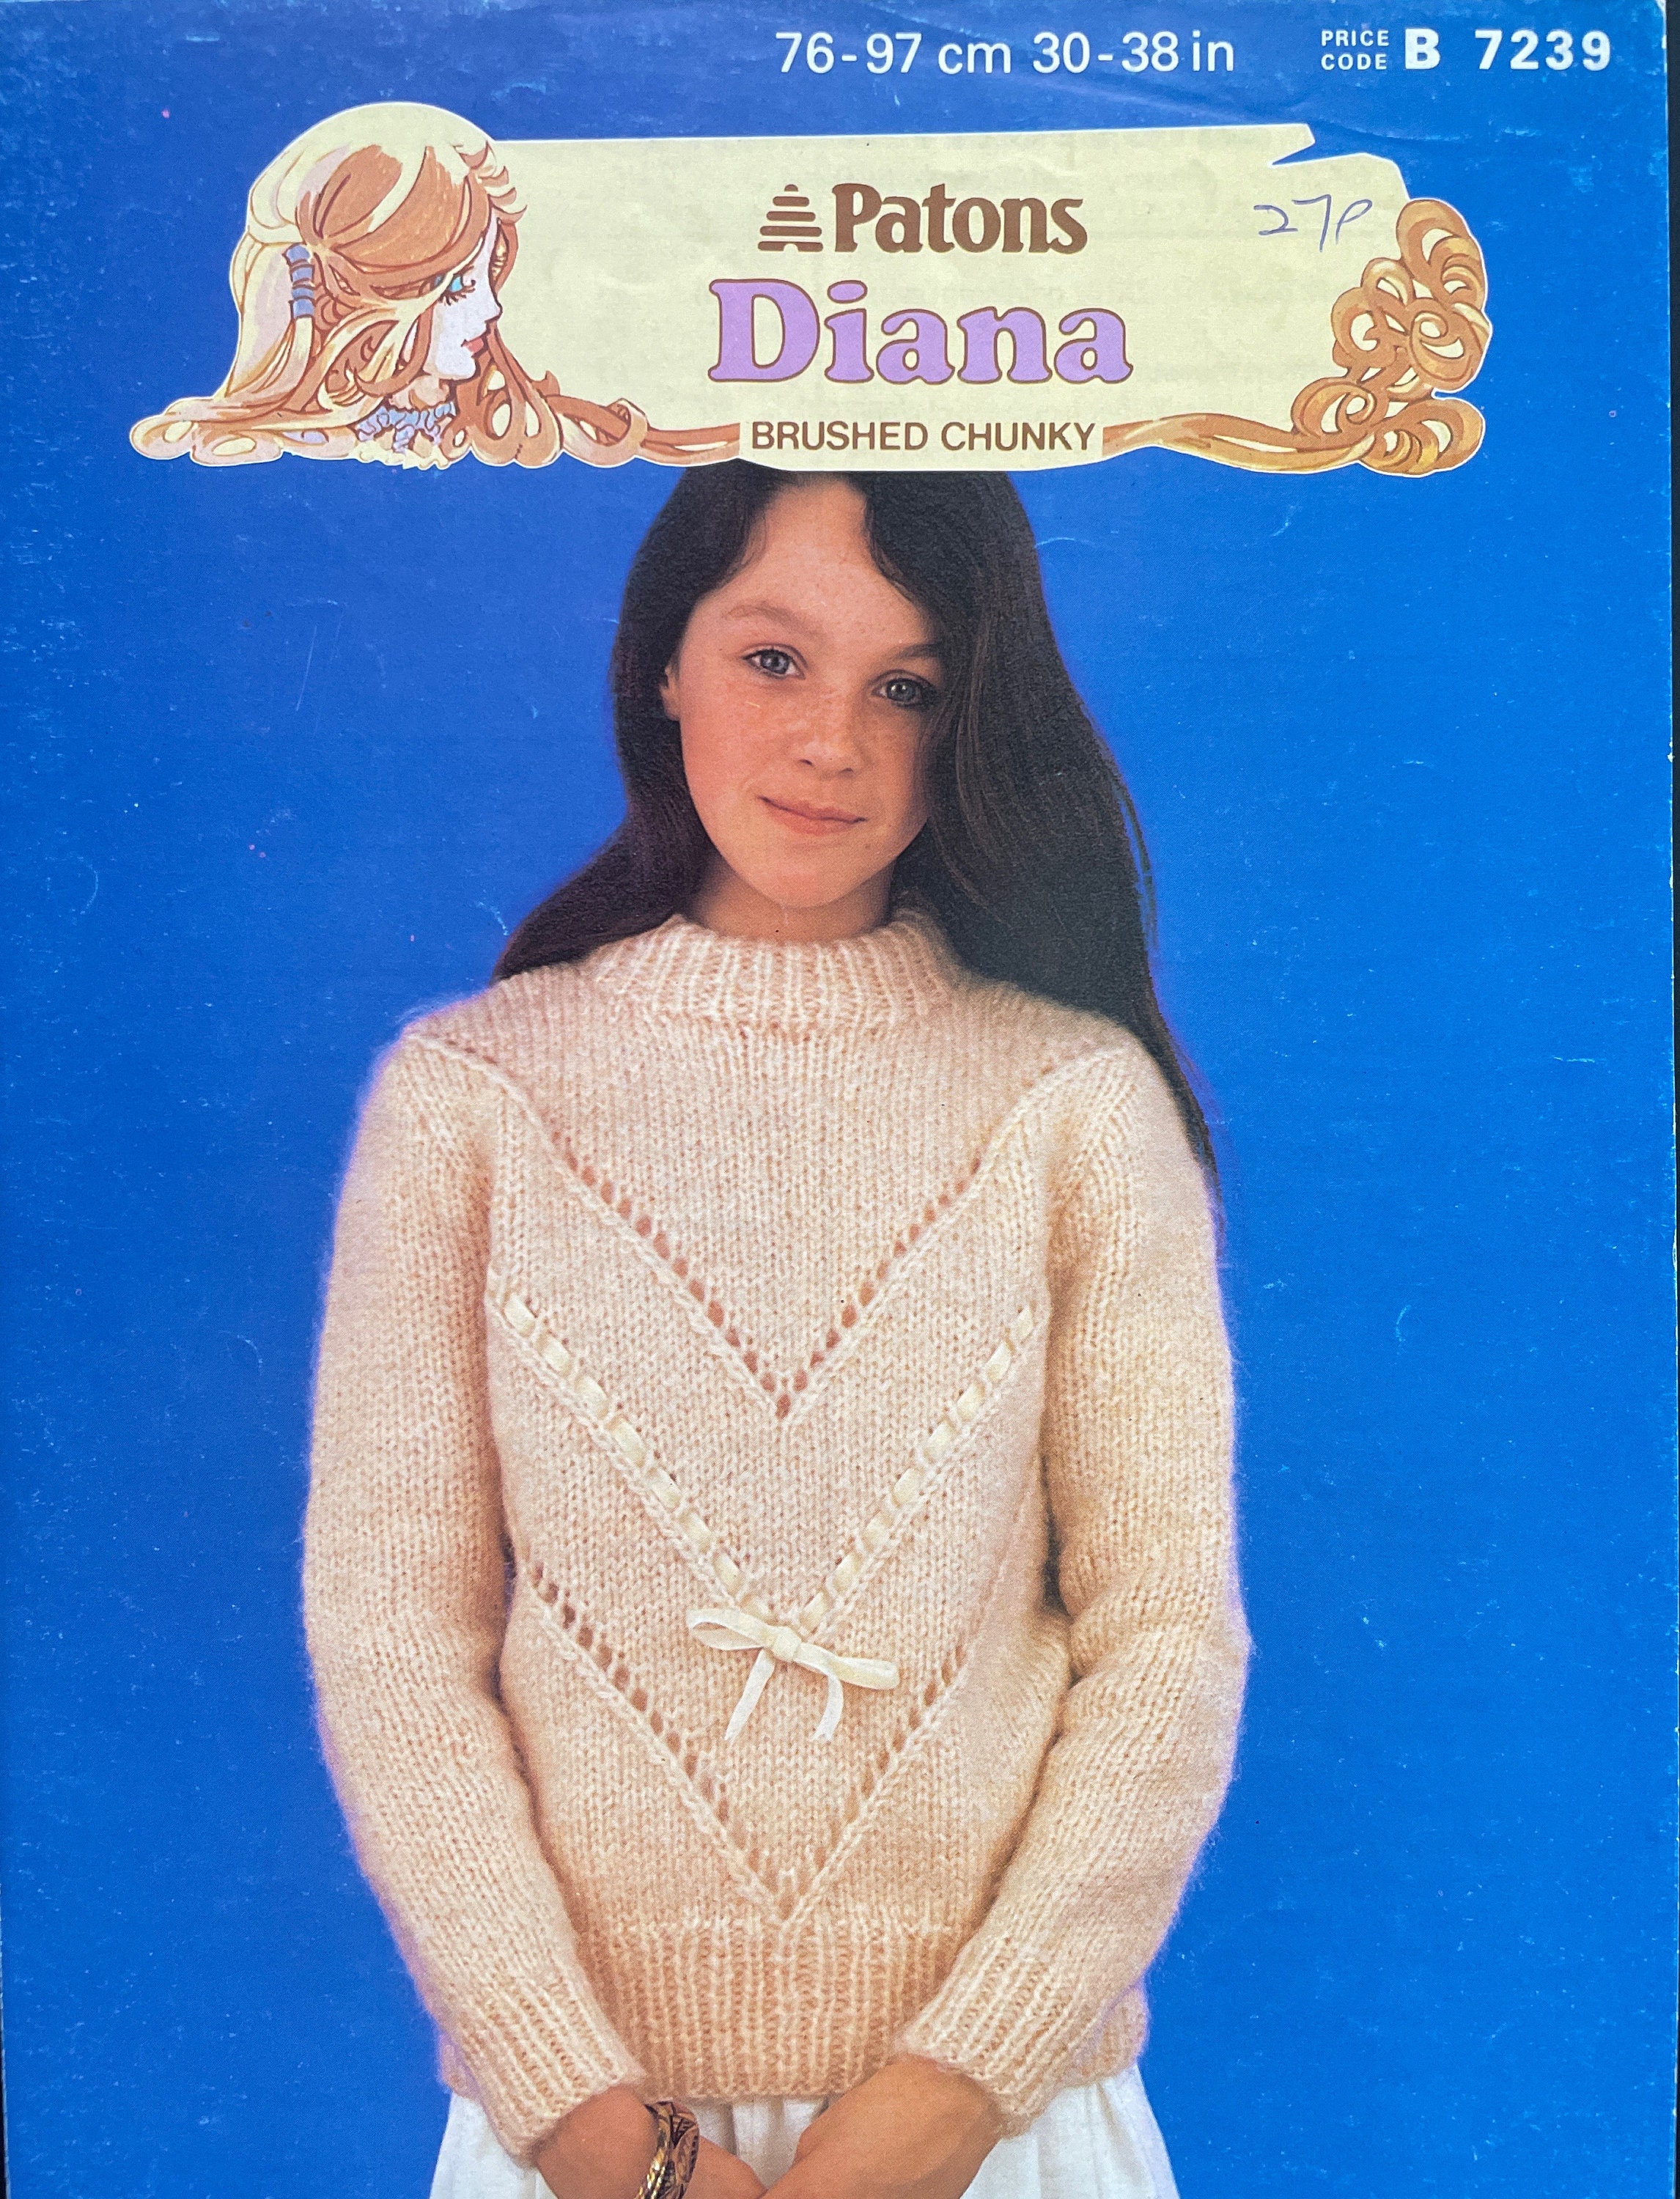 Patons Diana Brushed Chunky Yarn 50g